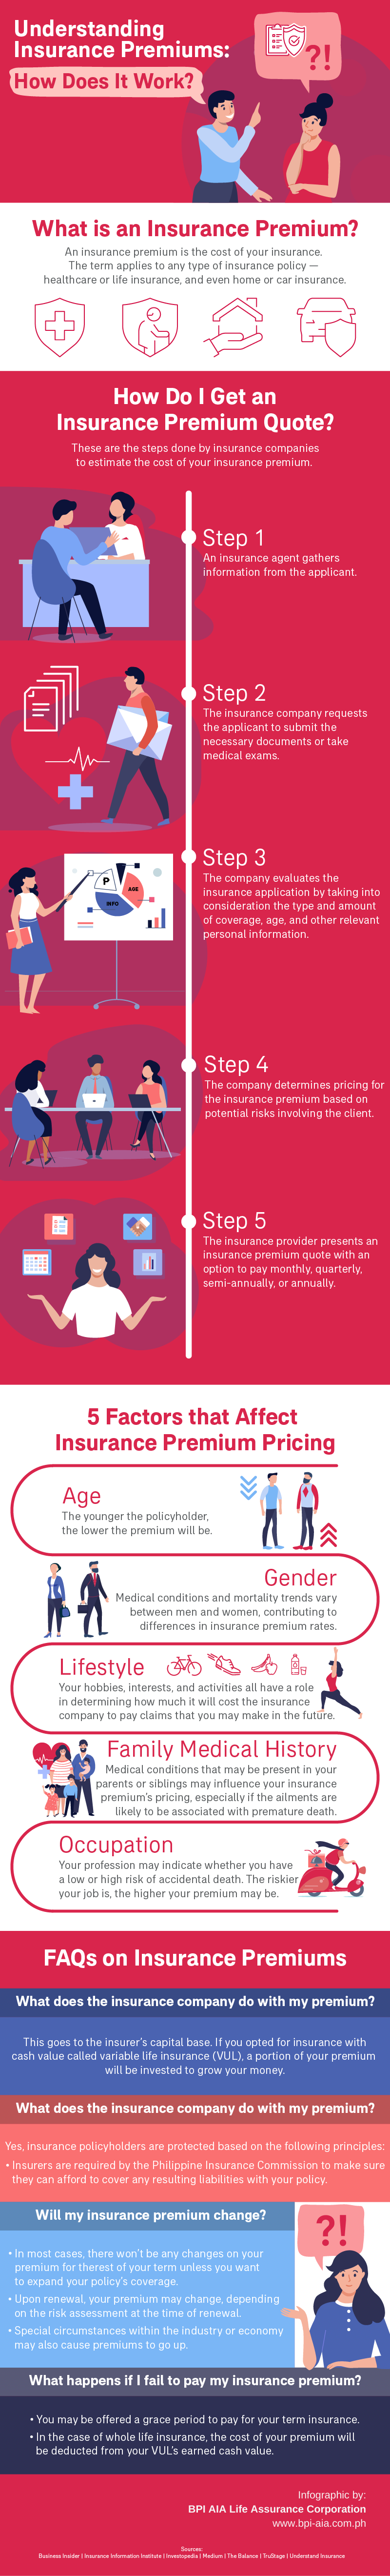 Understanding Insurance Premiums: How Does It Work?